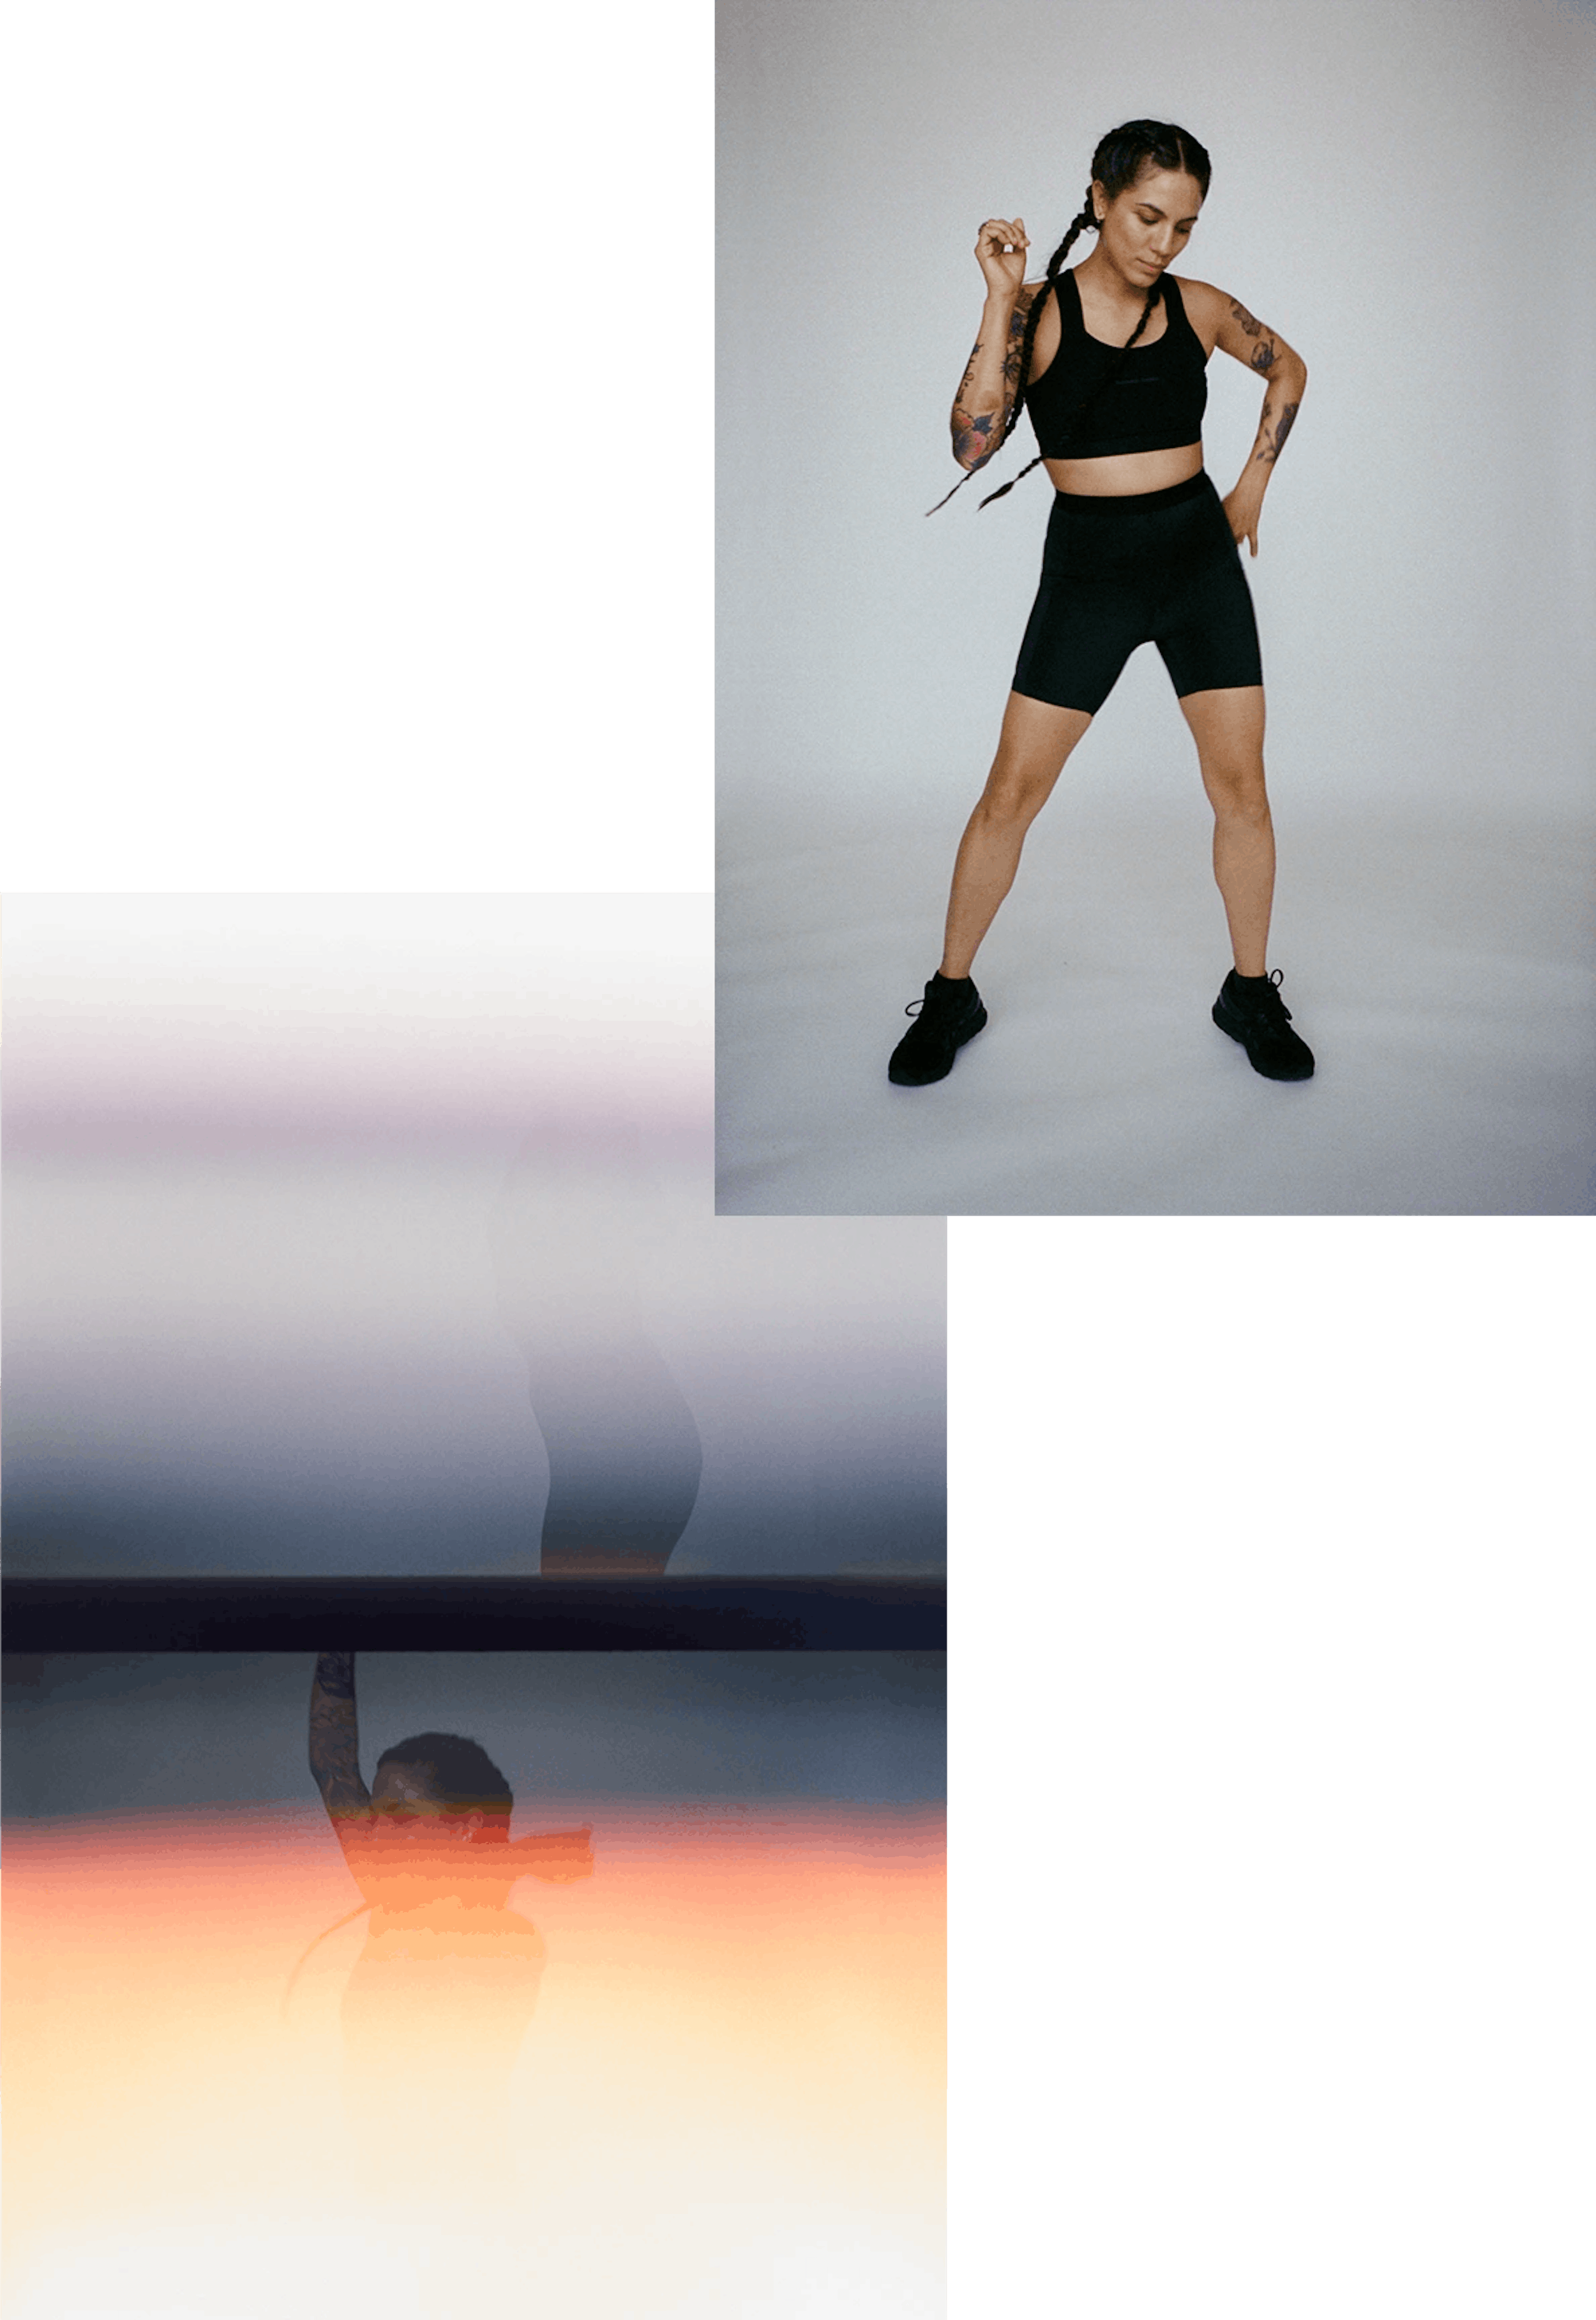 SÃO PAULO-BASED DJ & Producer Amanda Mussi interviewed by Running Order while wearing the Sedef Sports Bra &  Ari 6" Shorts